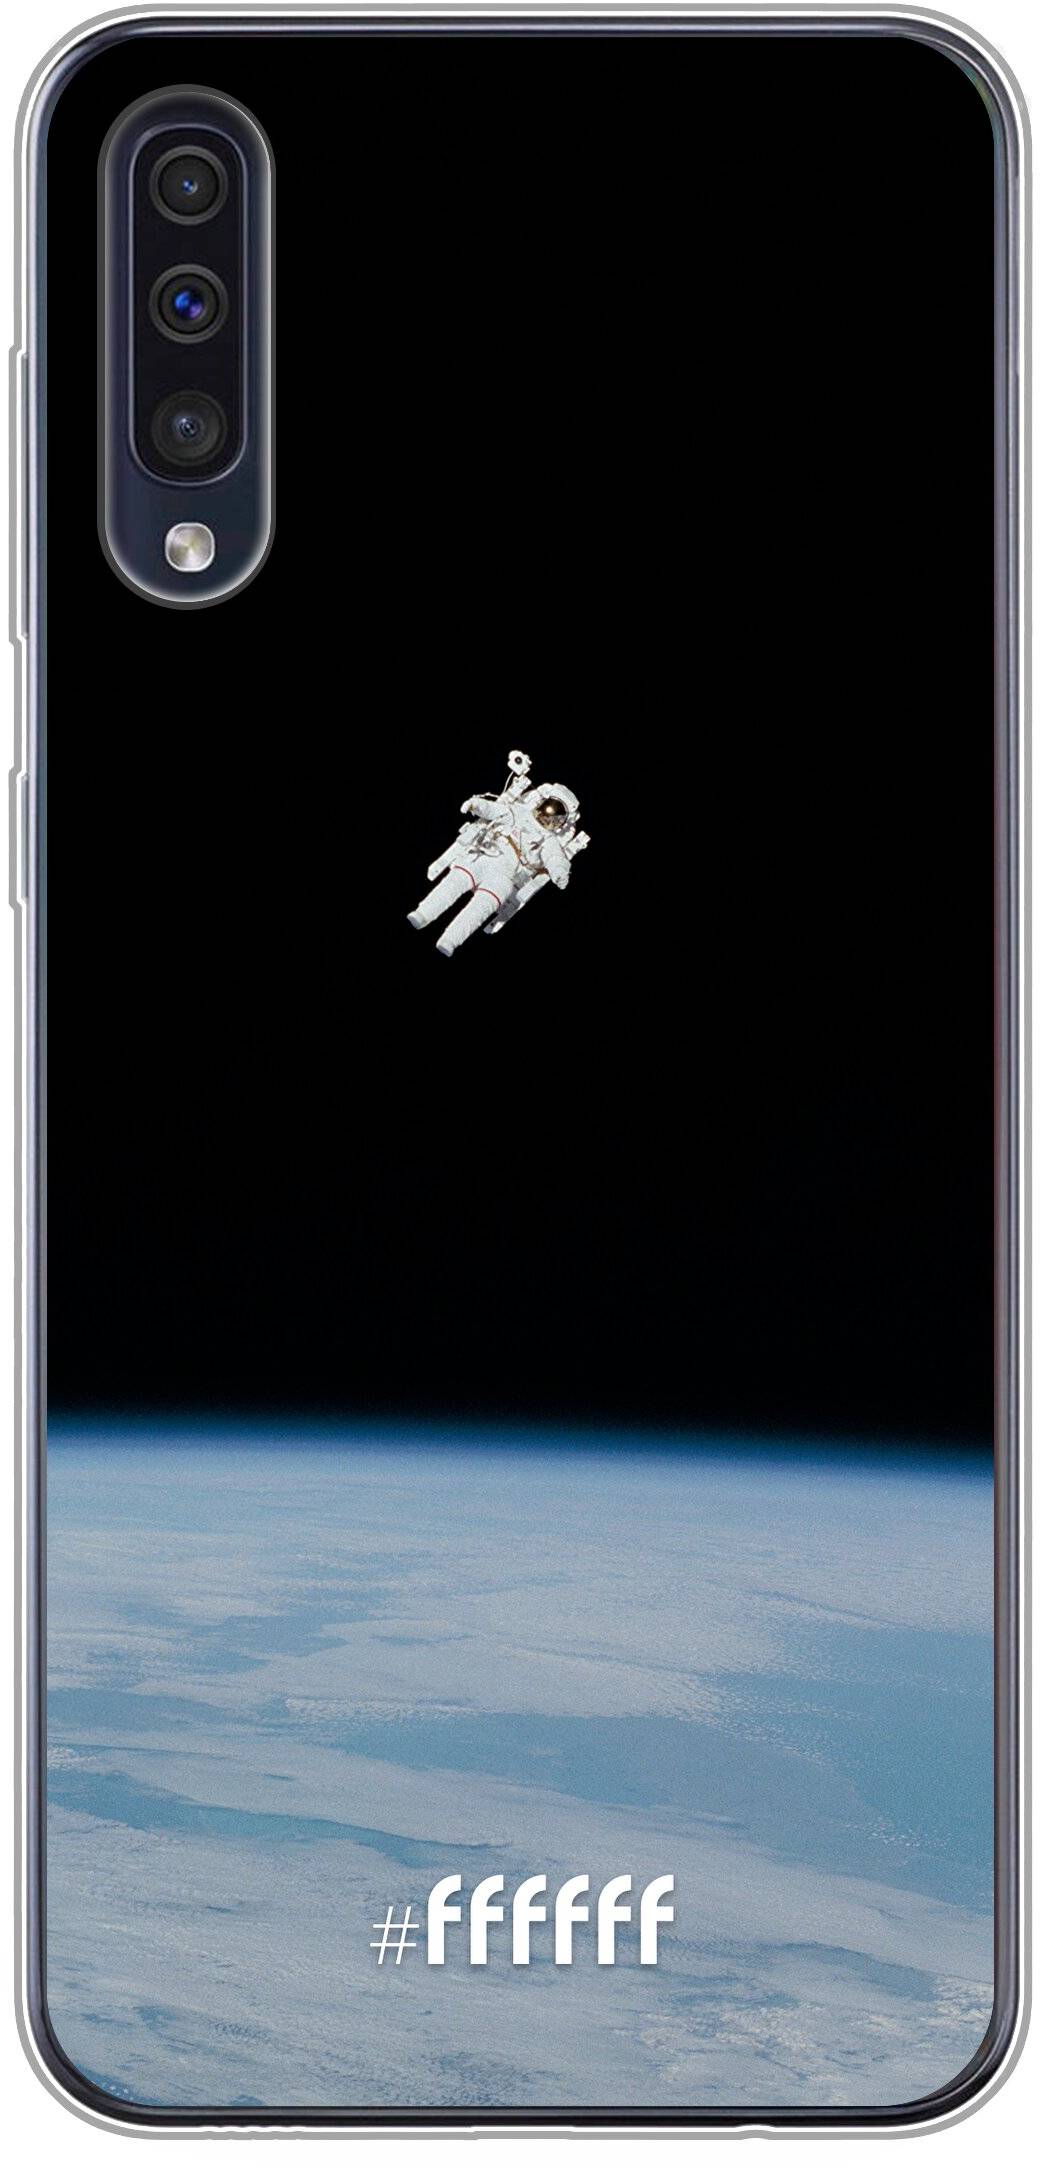 Spacewalk Galaxy A40